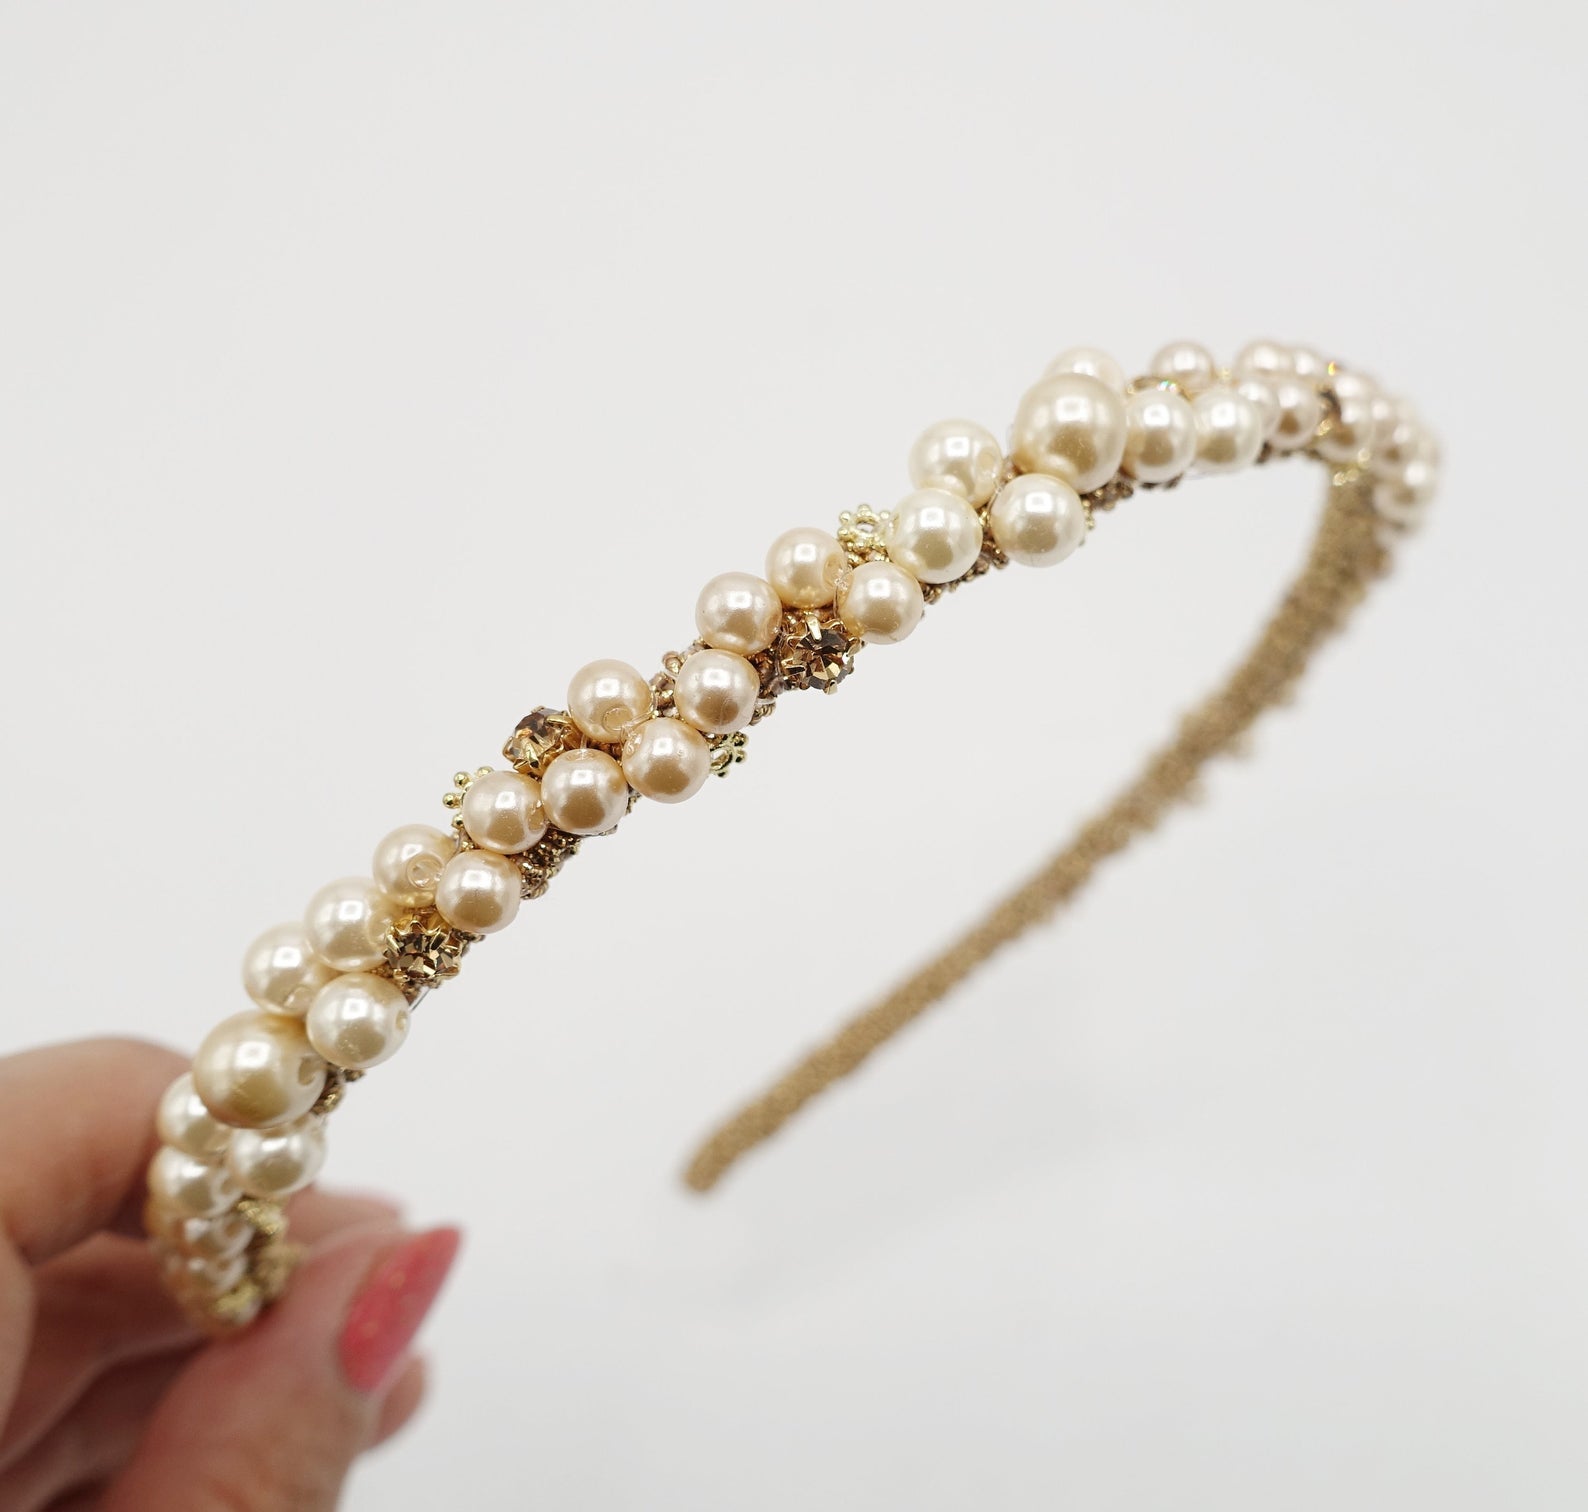 Get Gabrielle Union’s Romantic Paris Fashion Week Hair With These Pearl Headbands